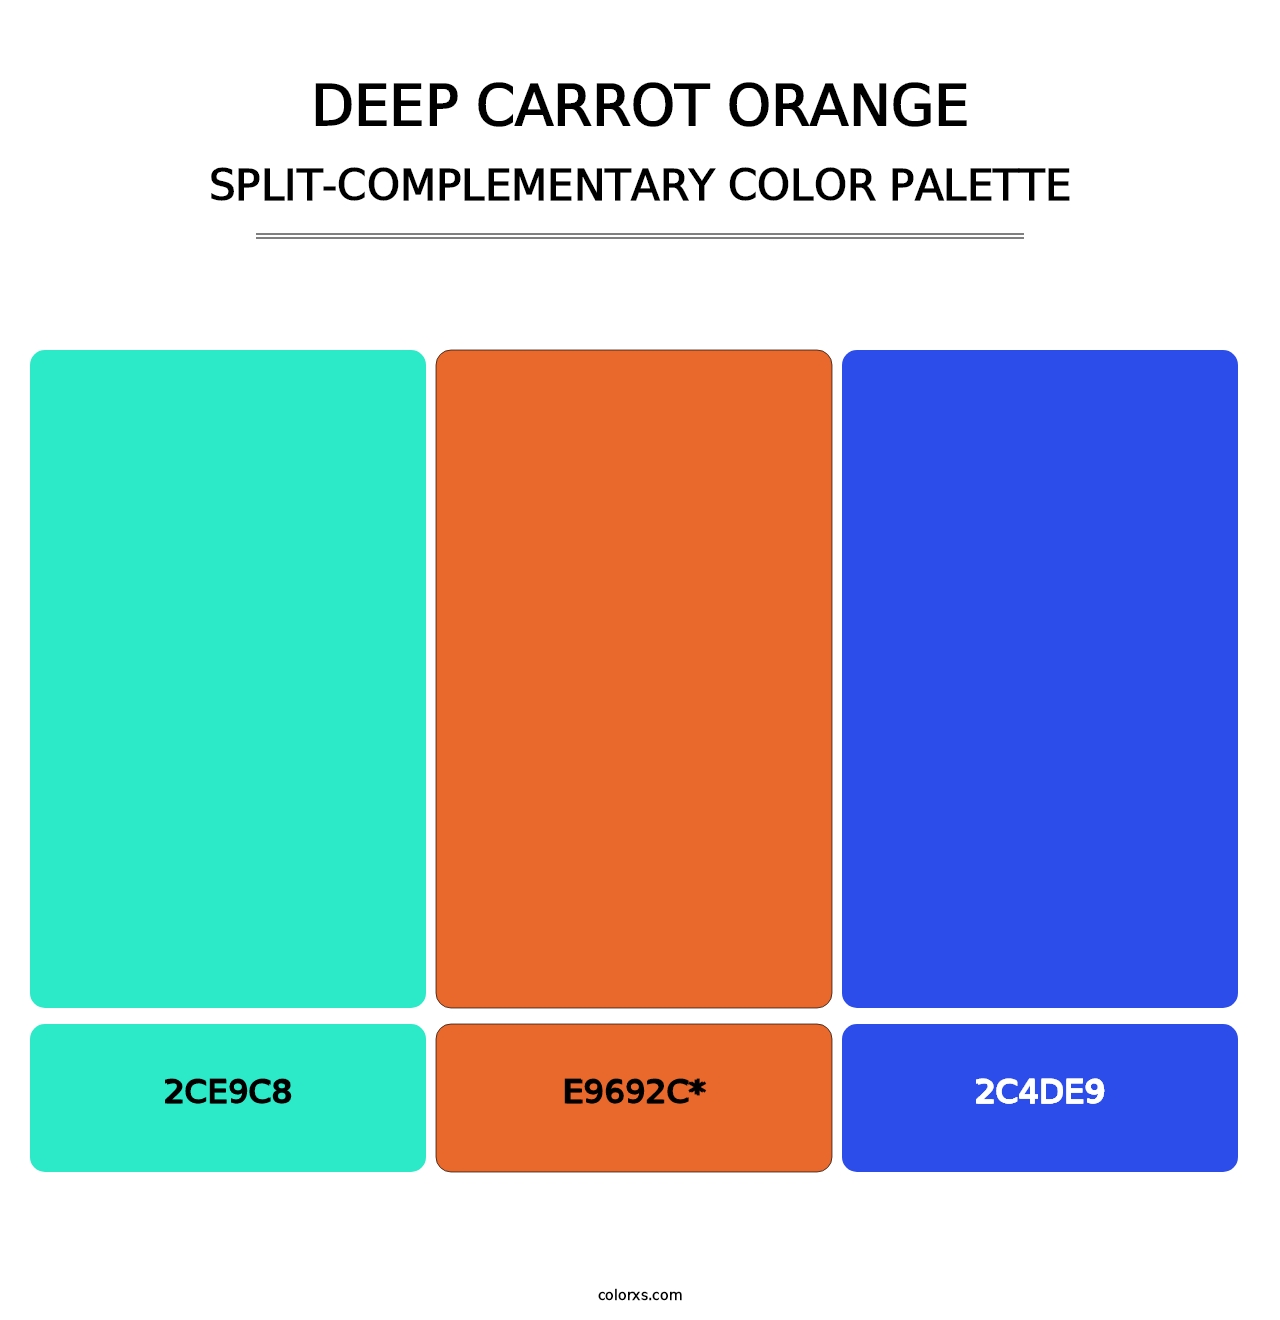 Deep Carrot Orange - Split-Complementary Color Palette